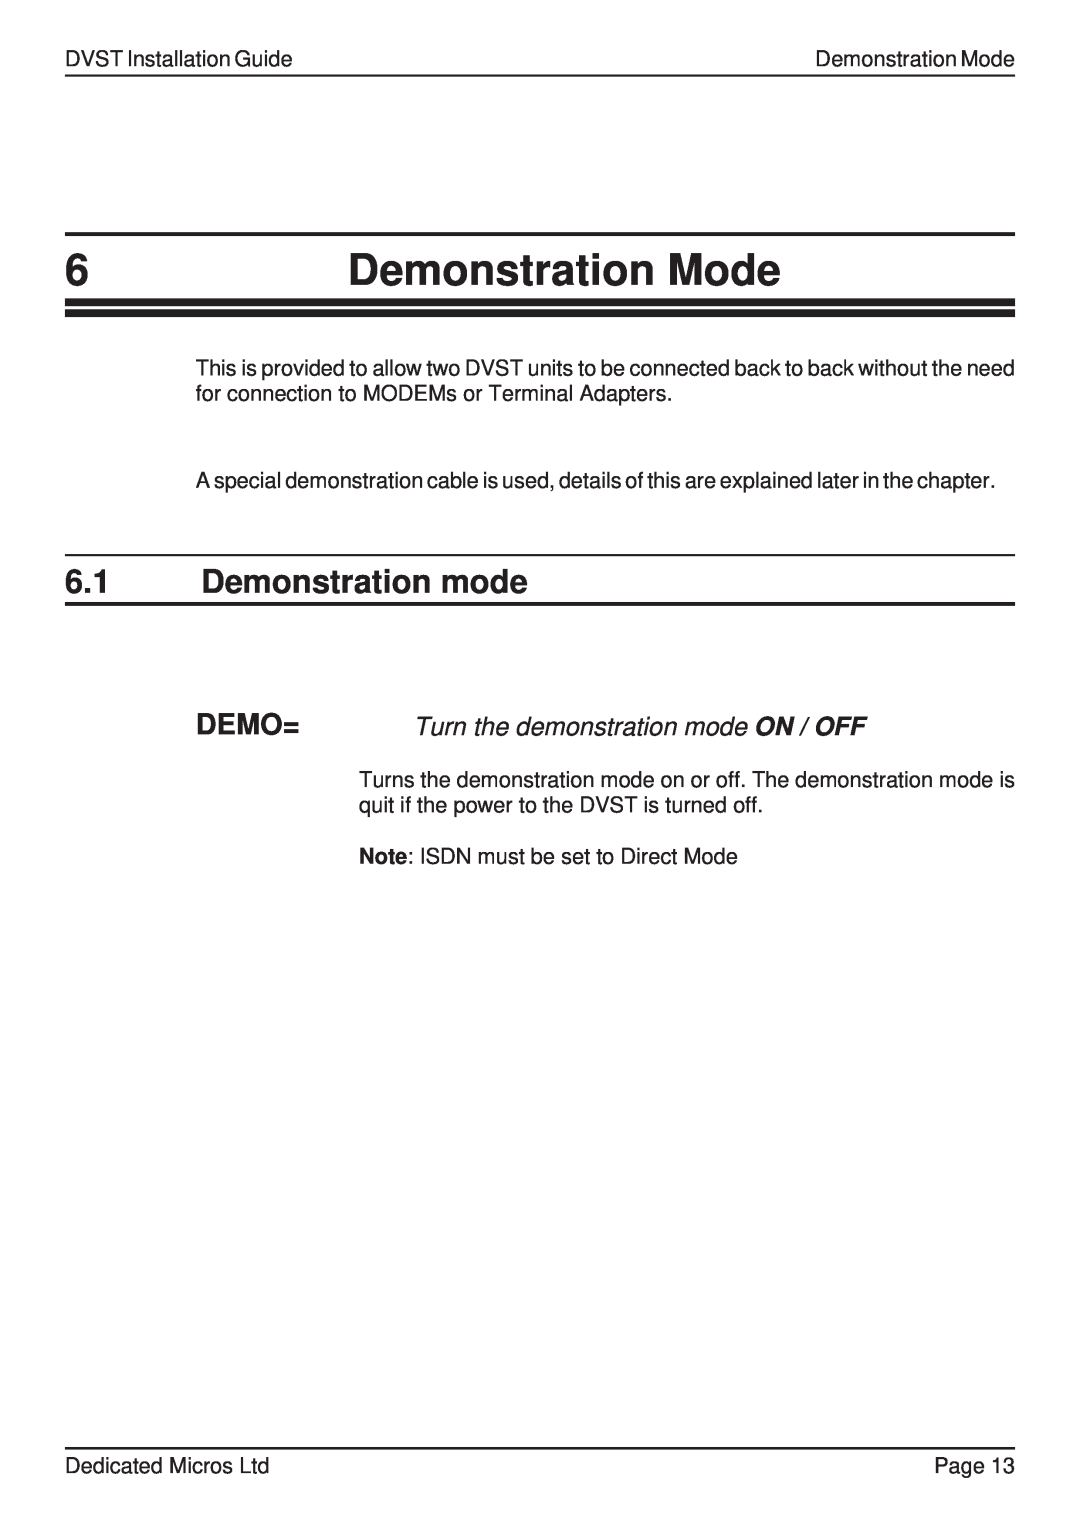 Guardian Technologies DFT 150/175 Demonstration Mode, 6.1Demonstration mode, Demo=, Turn the demonstration mode ON / OFF 